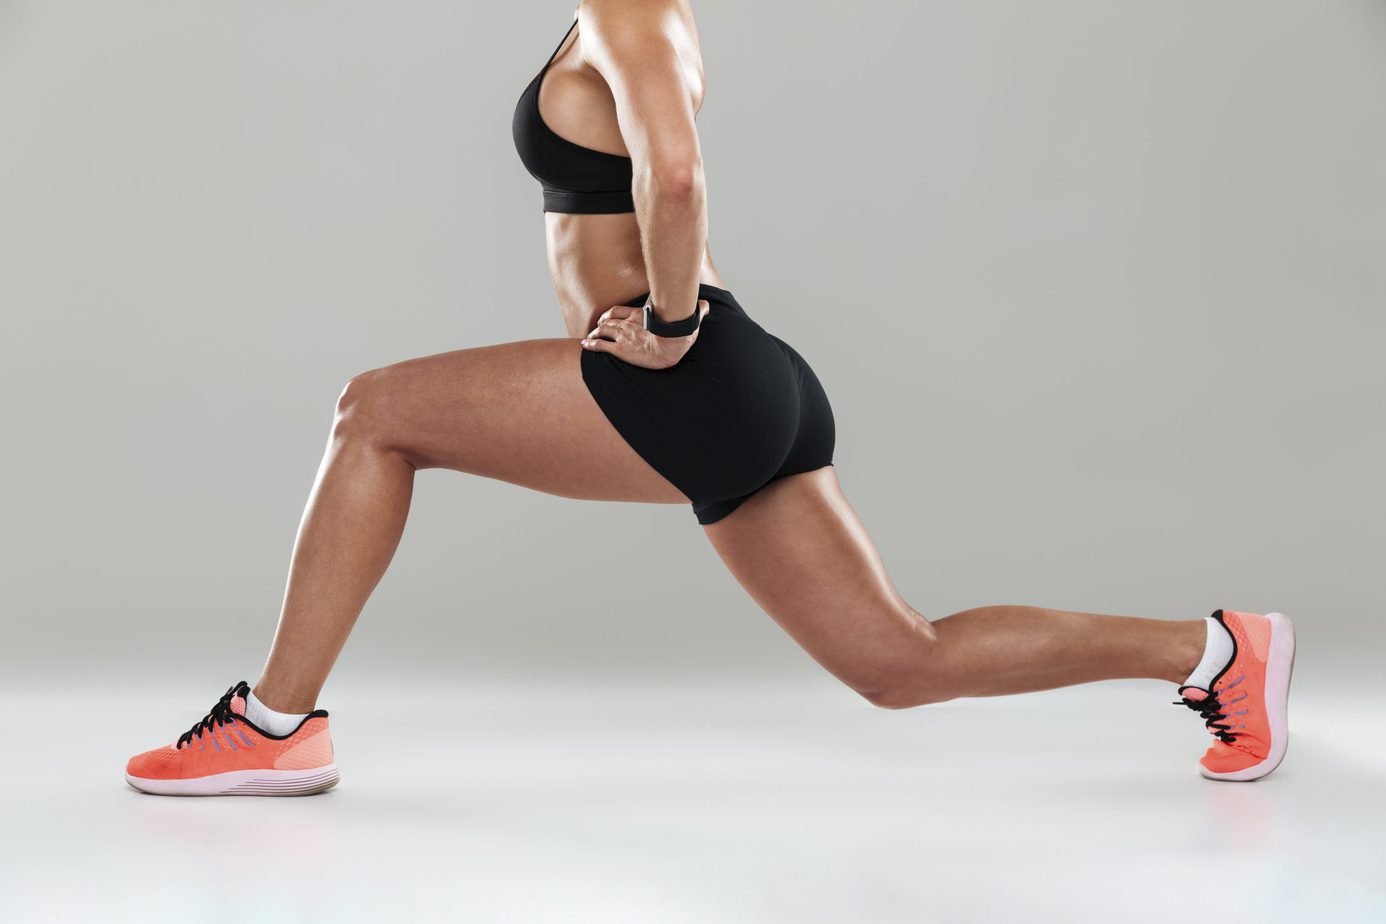 Eva Longoria with an inspiring workout for her buttocks. Victoria Beckham impressed!